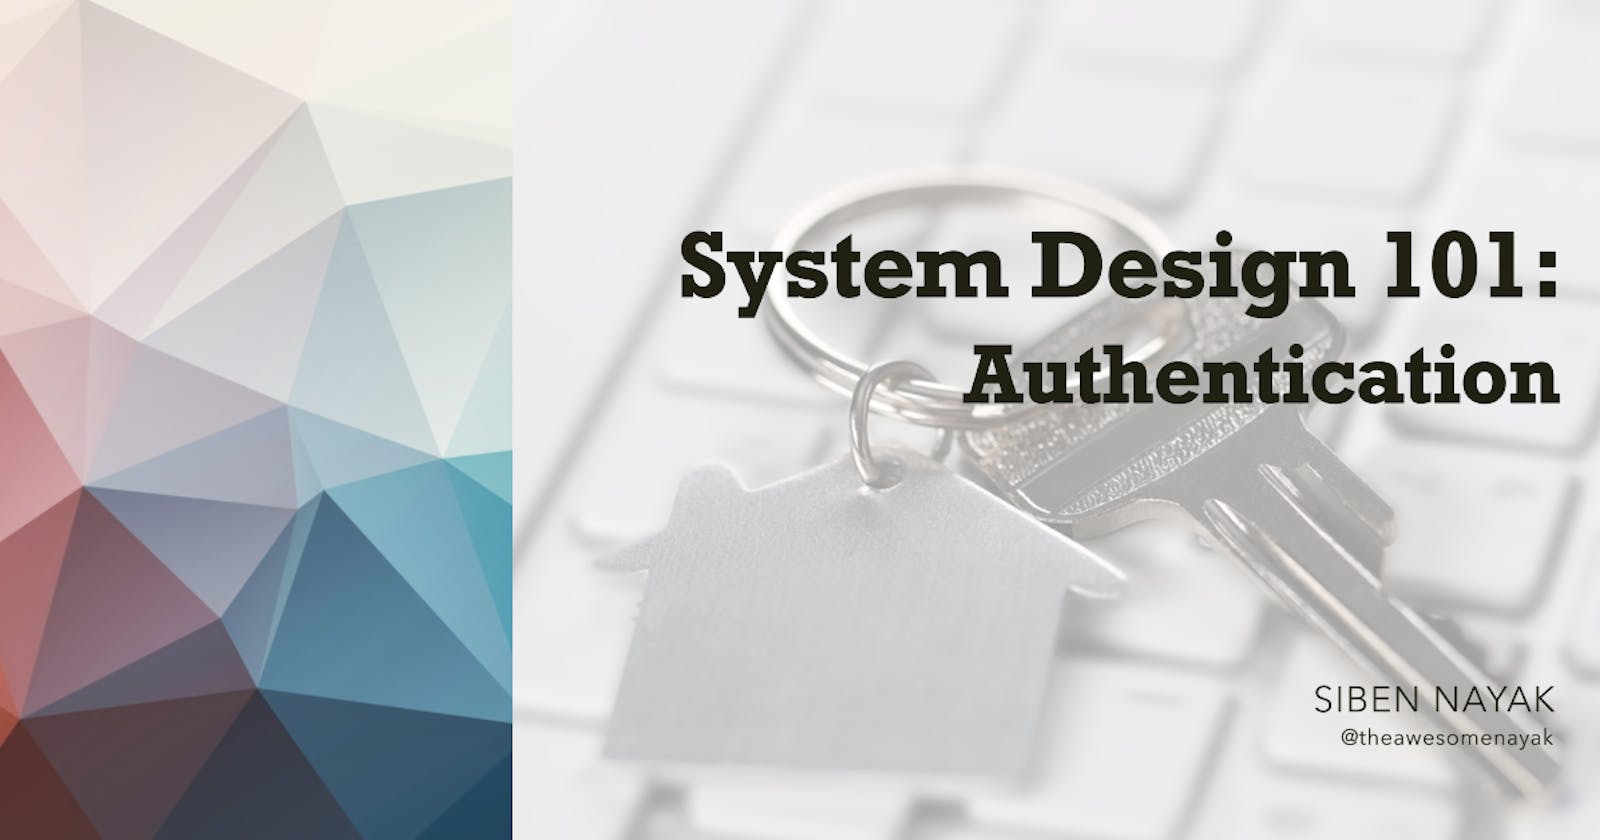 System Design 101 - Authentication